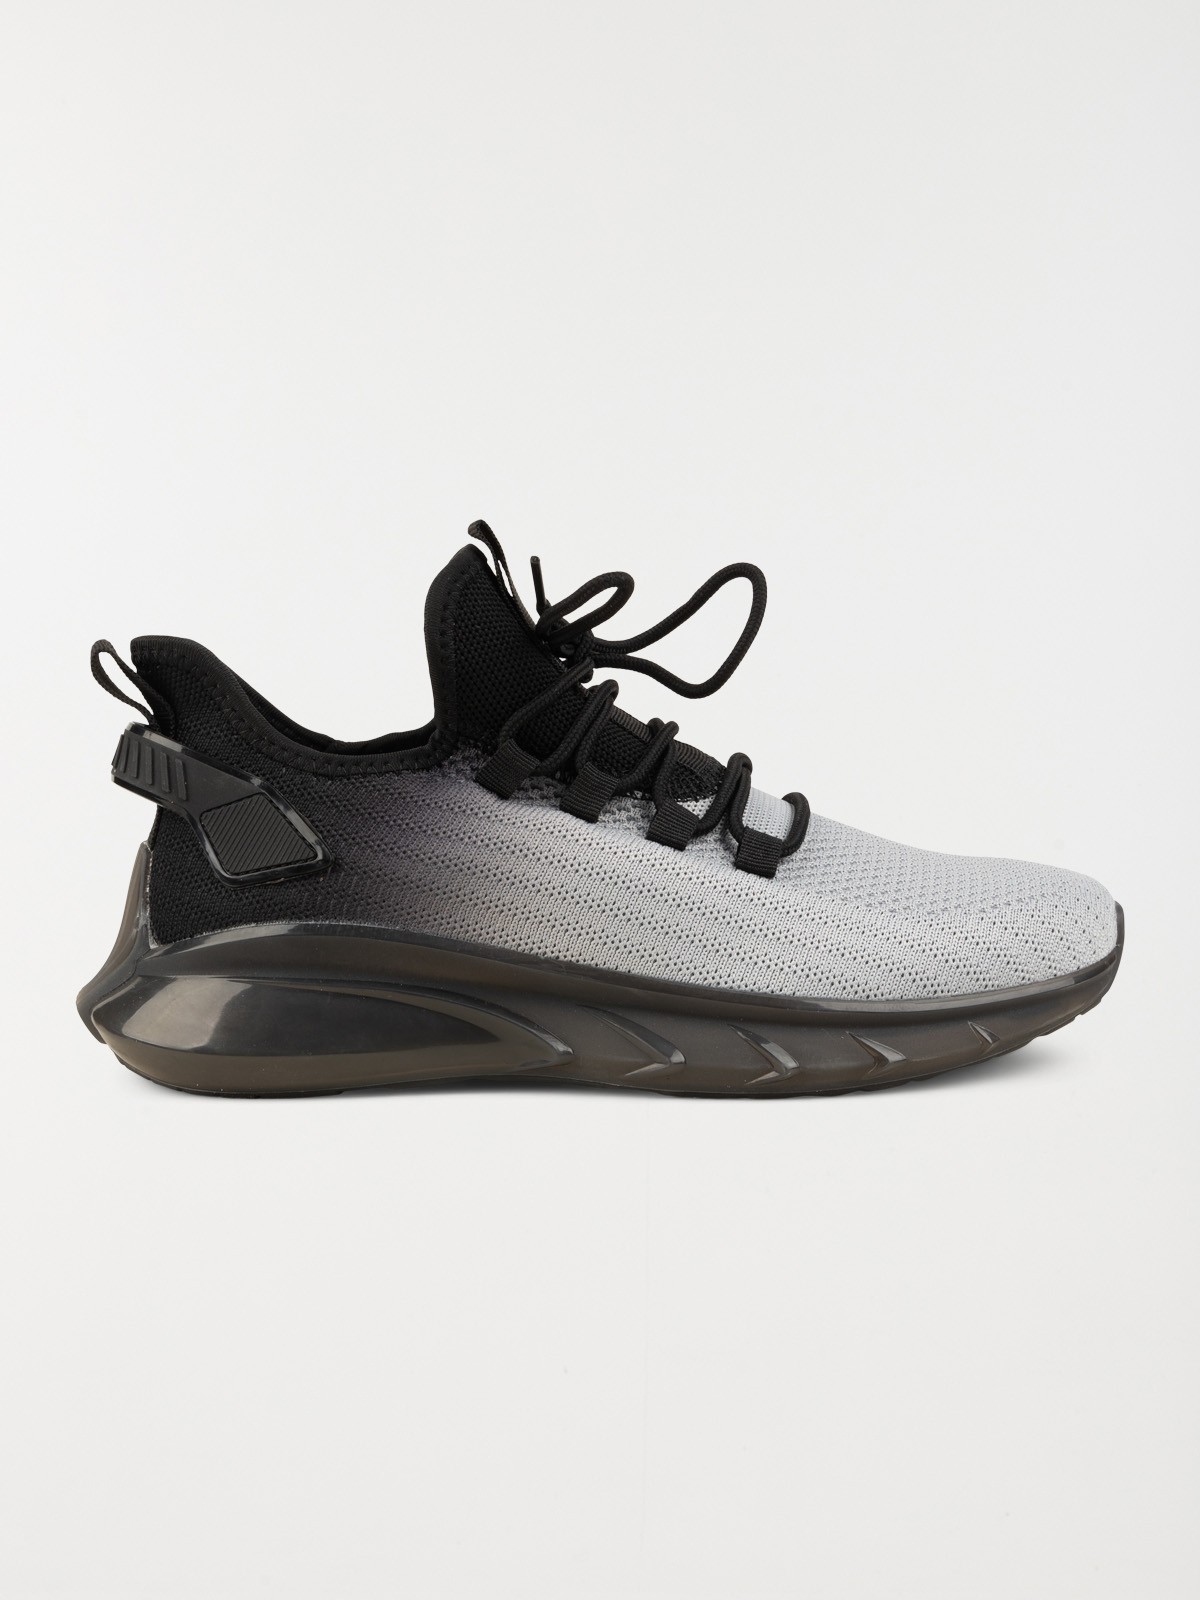 Chaussures sport homme gris (40-46) - DistriCenter